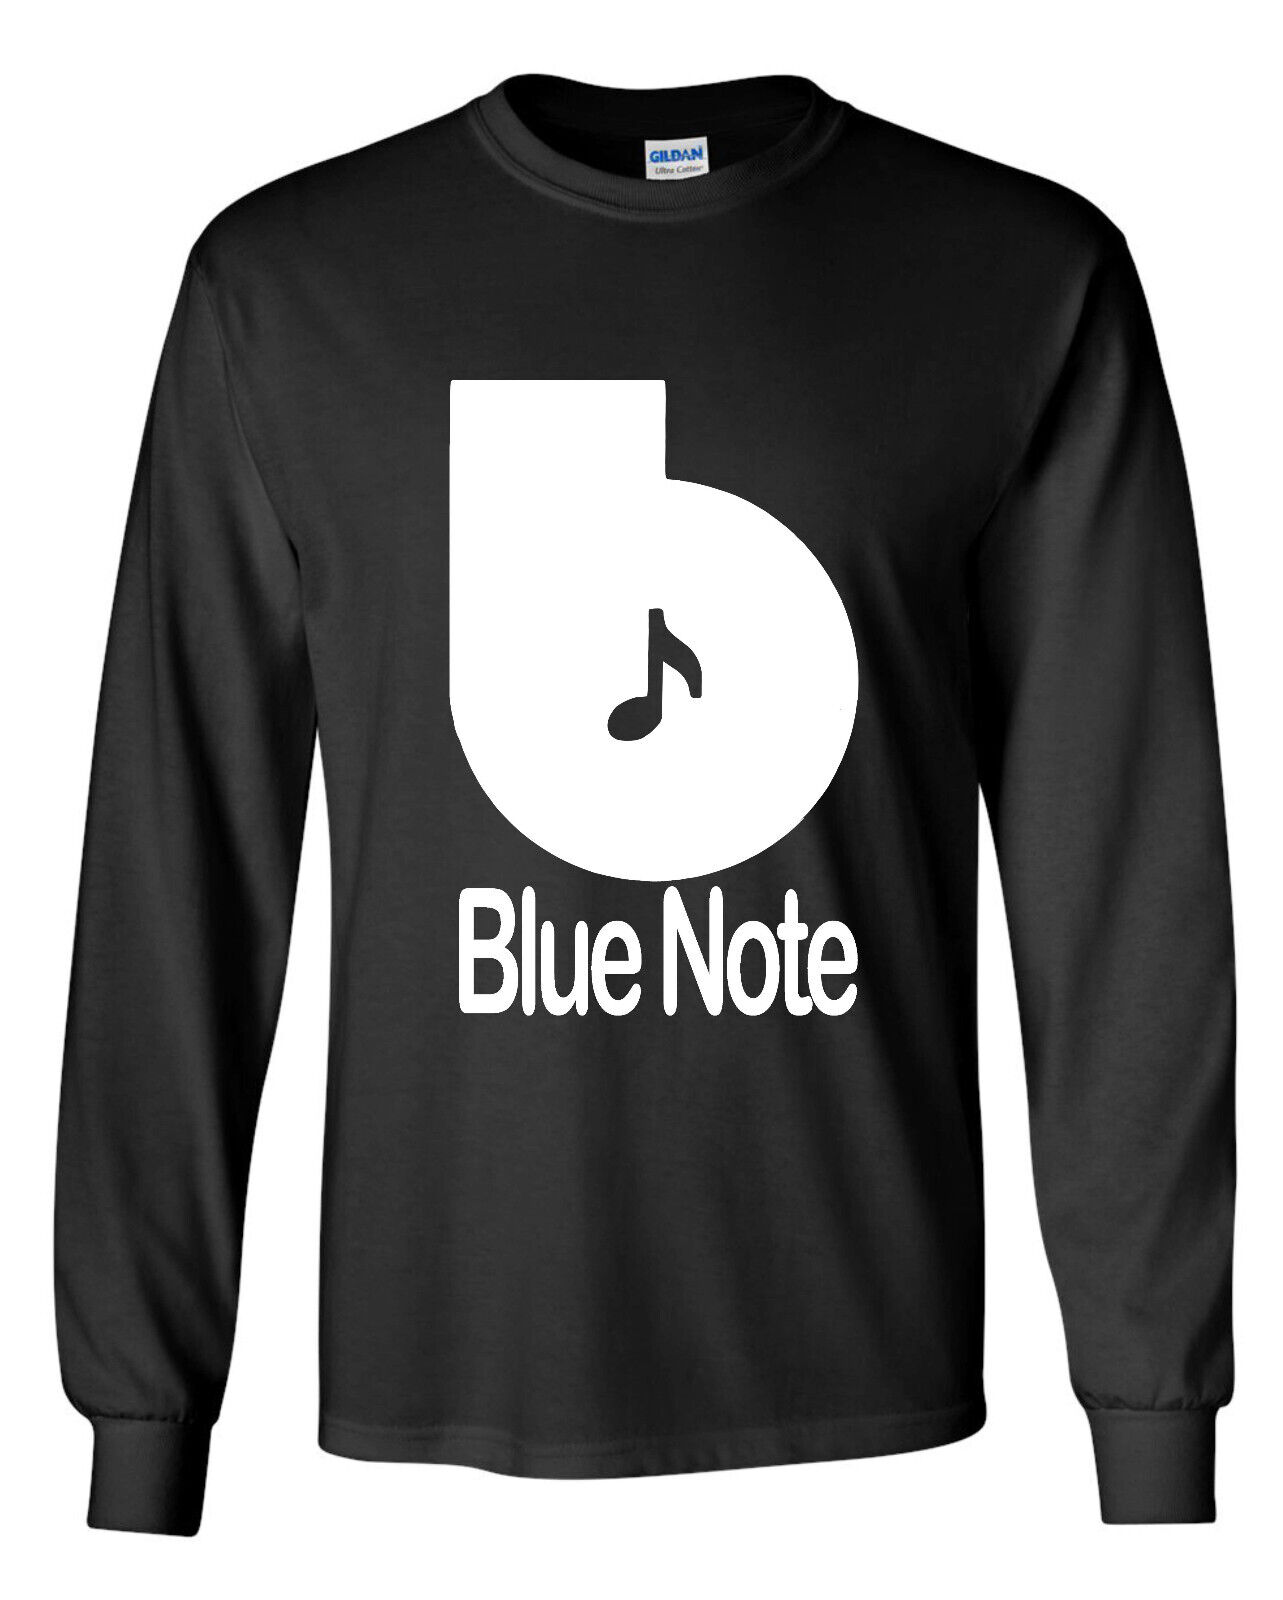 Blue Note long Sleeve T-Shirt - Jazz record label - Miles Davis Lee Morgan